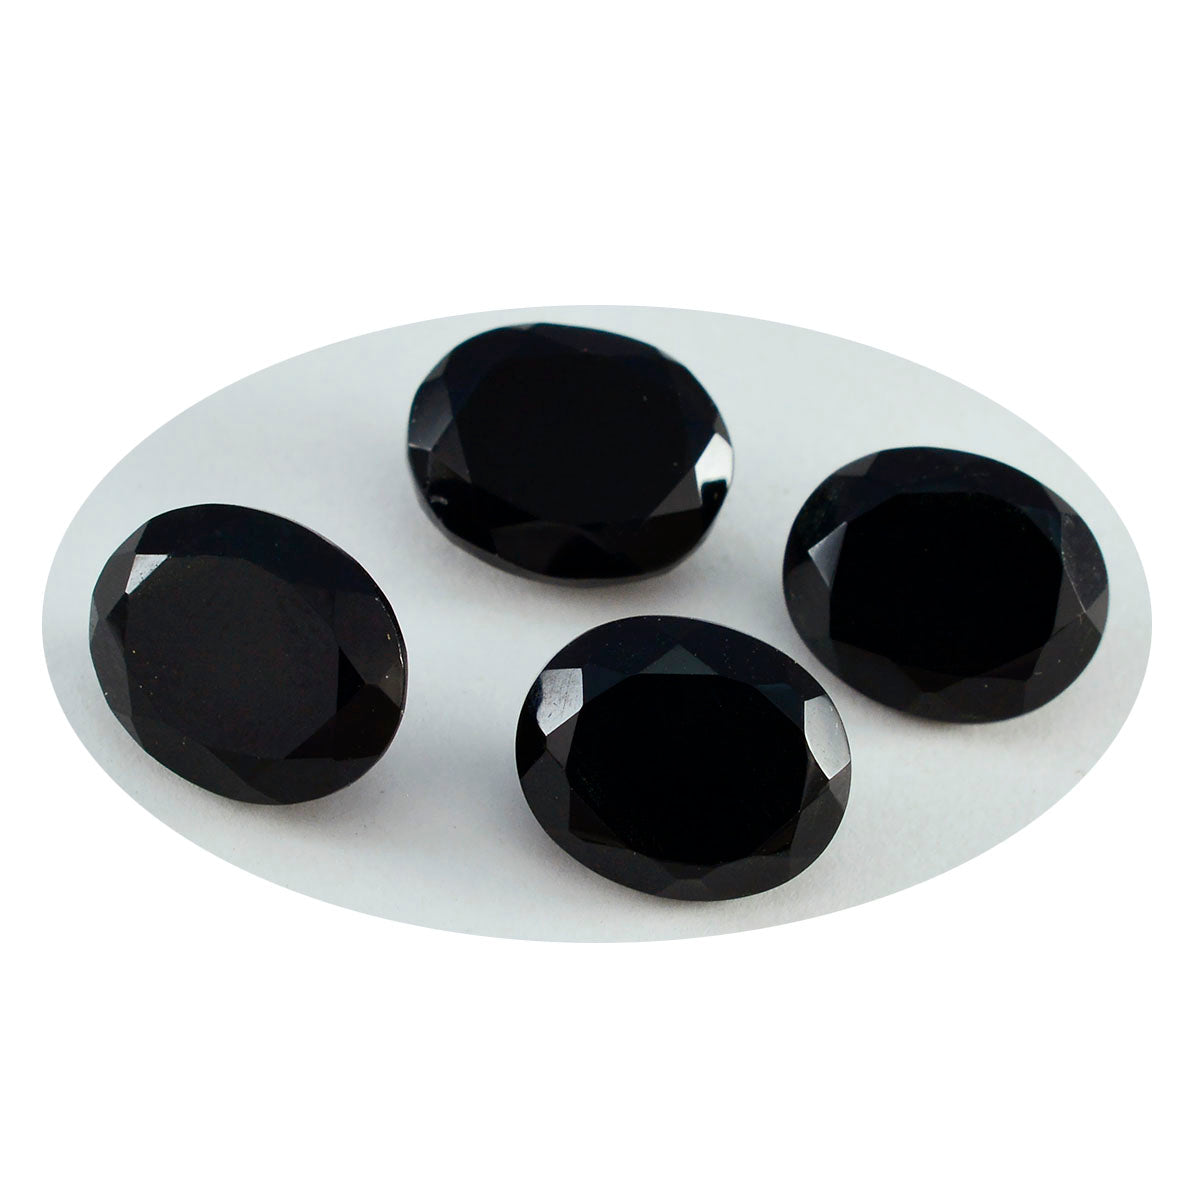 Riyogems 1PC Genuine Black Onyx Faceted 10x12 mm Oval Shape superb Quality Stone